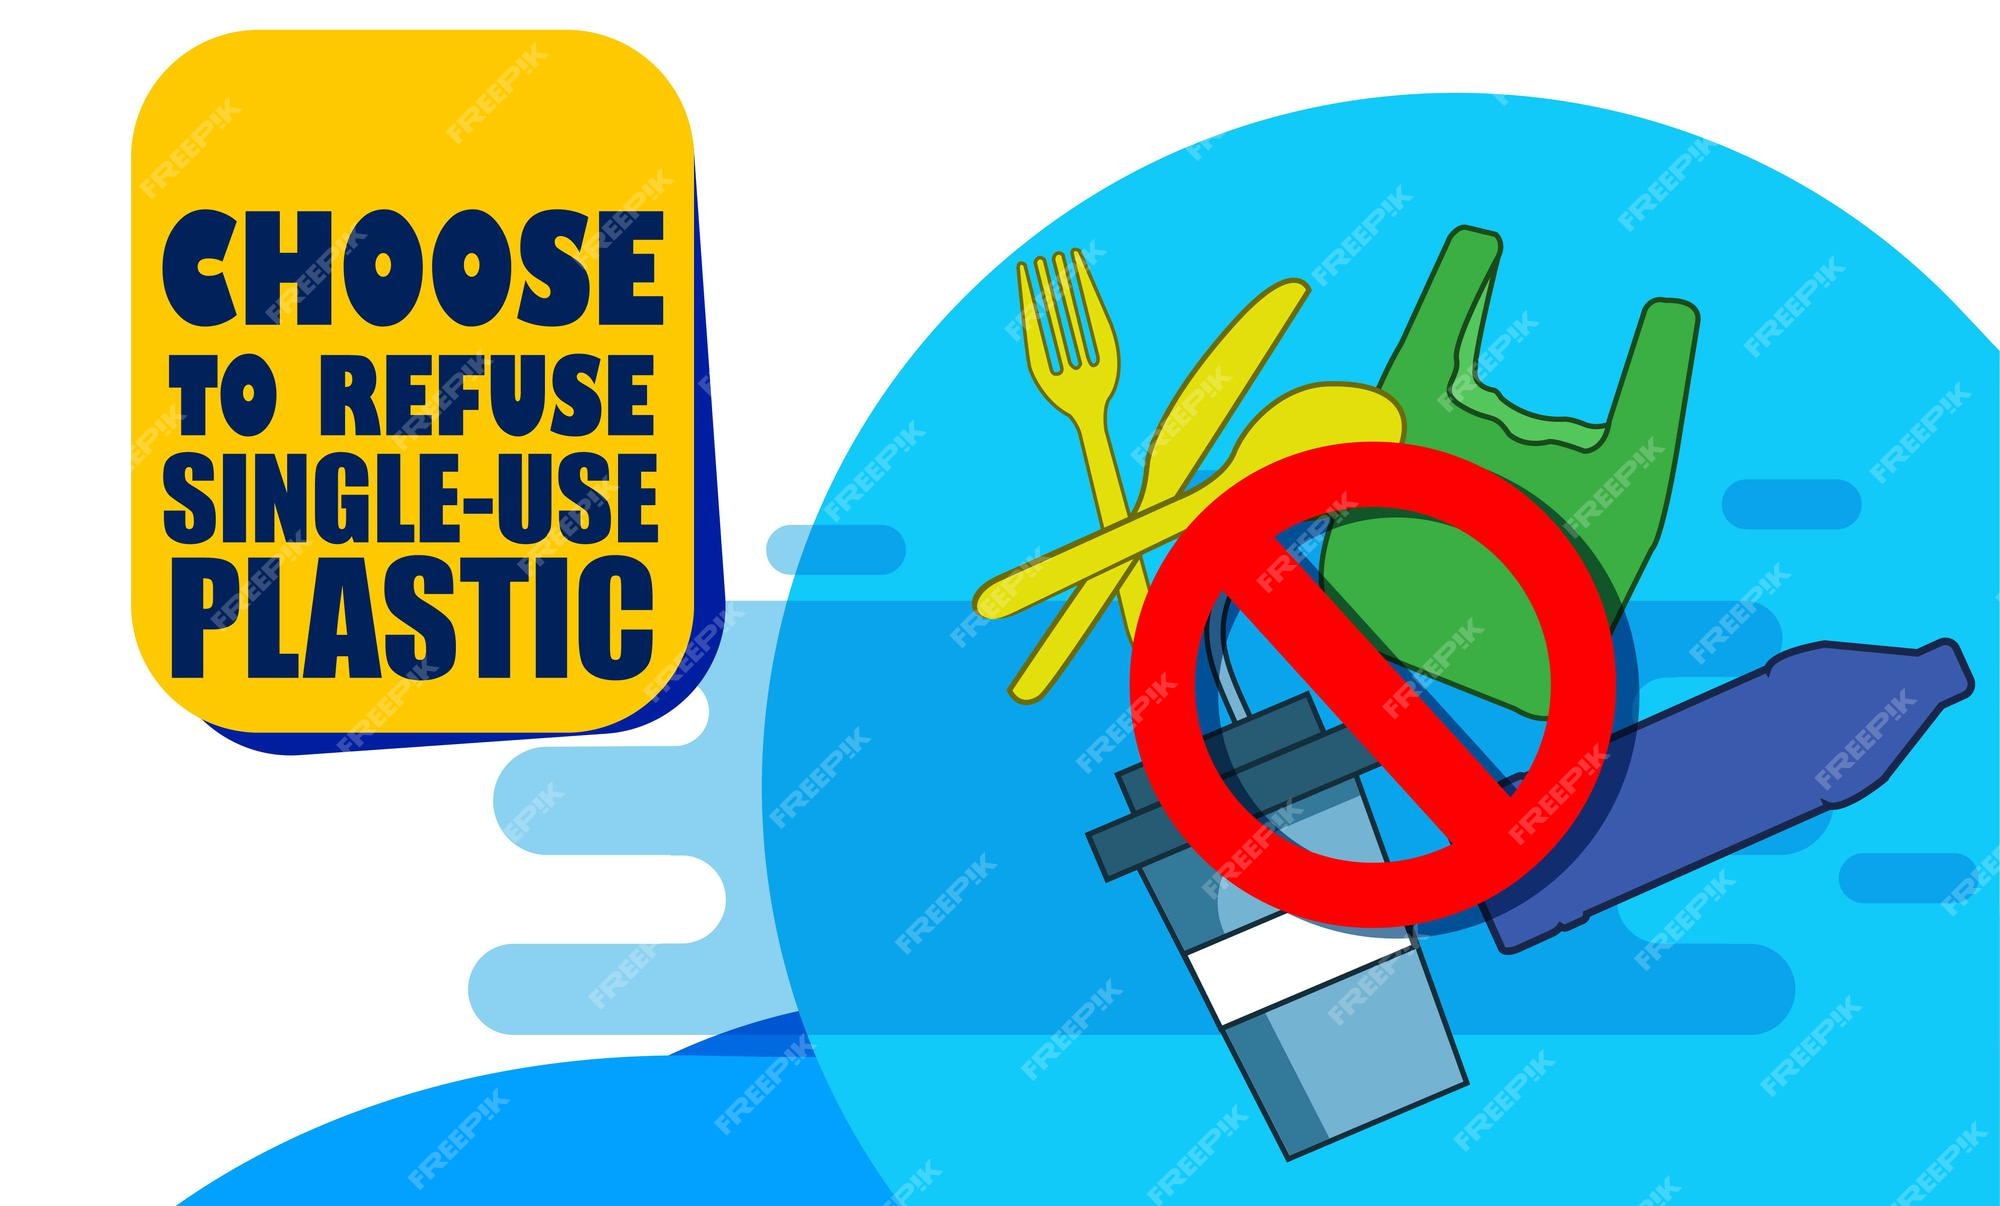 Premium Vector Single use plastic ban environmental concept say no to